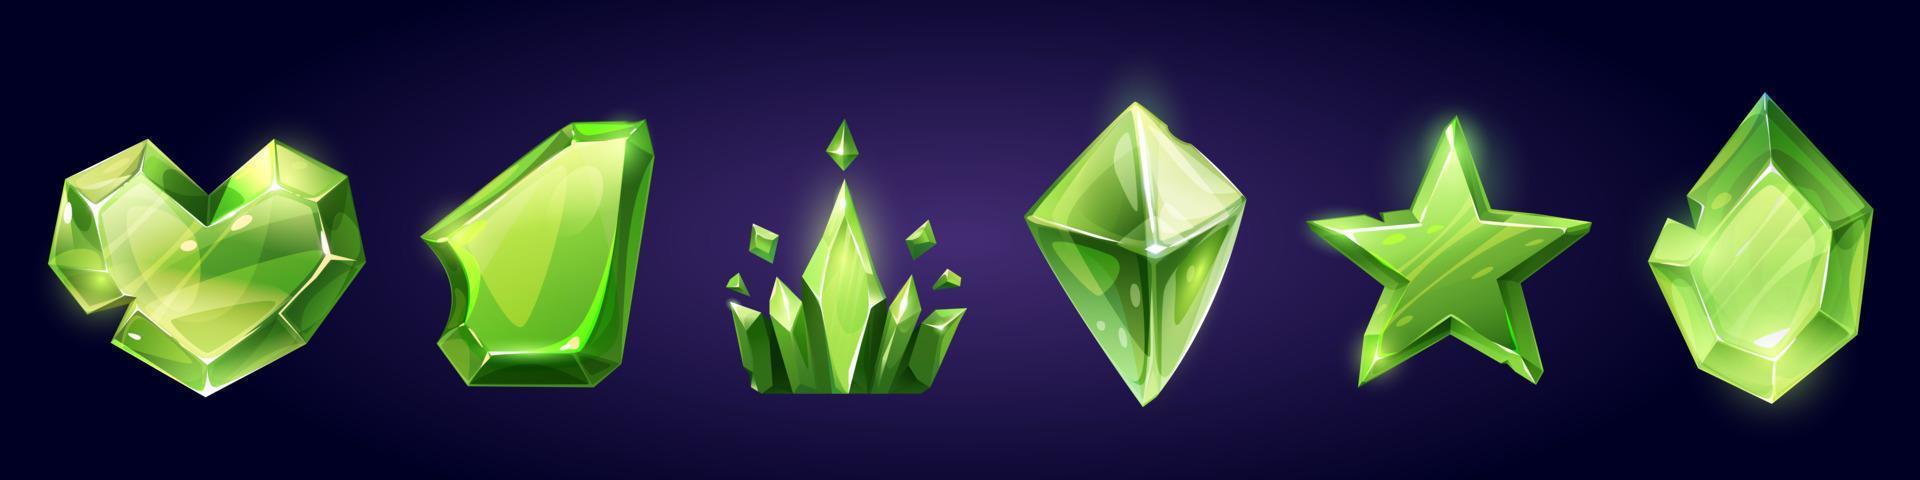 Game green gemstone, magic jewel crystal icons vector